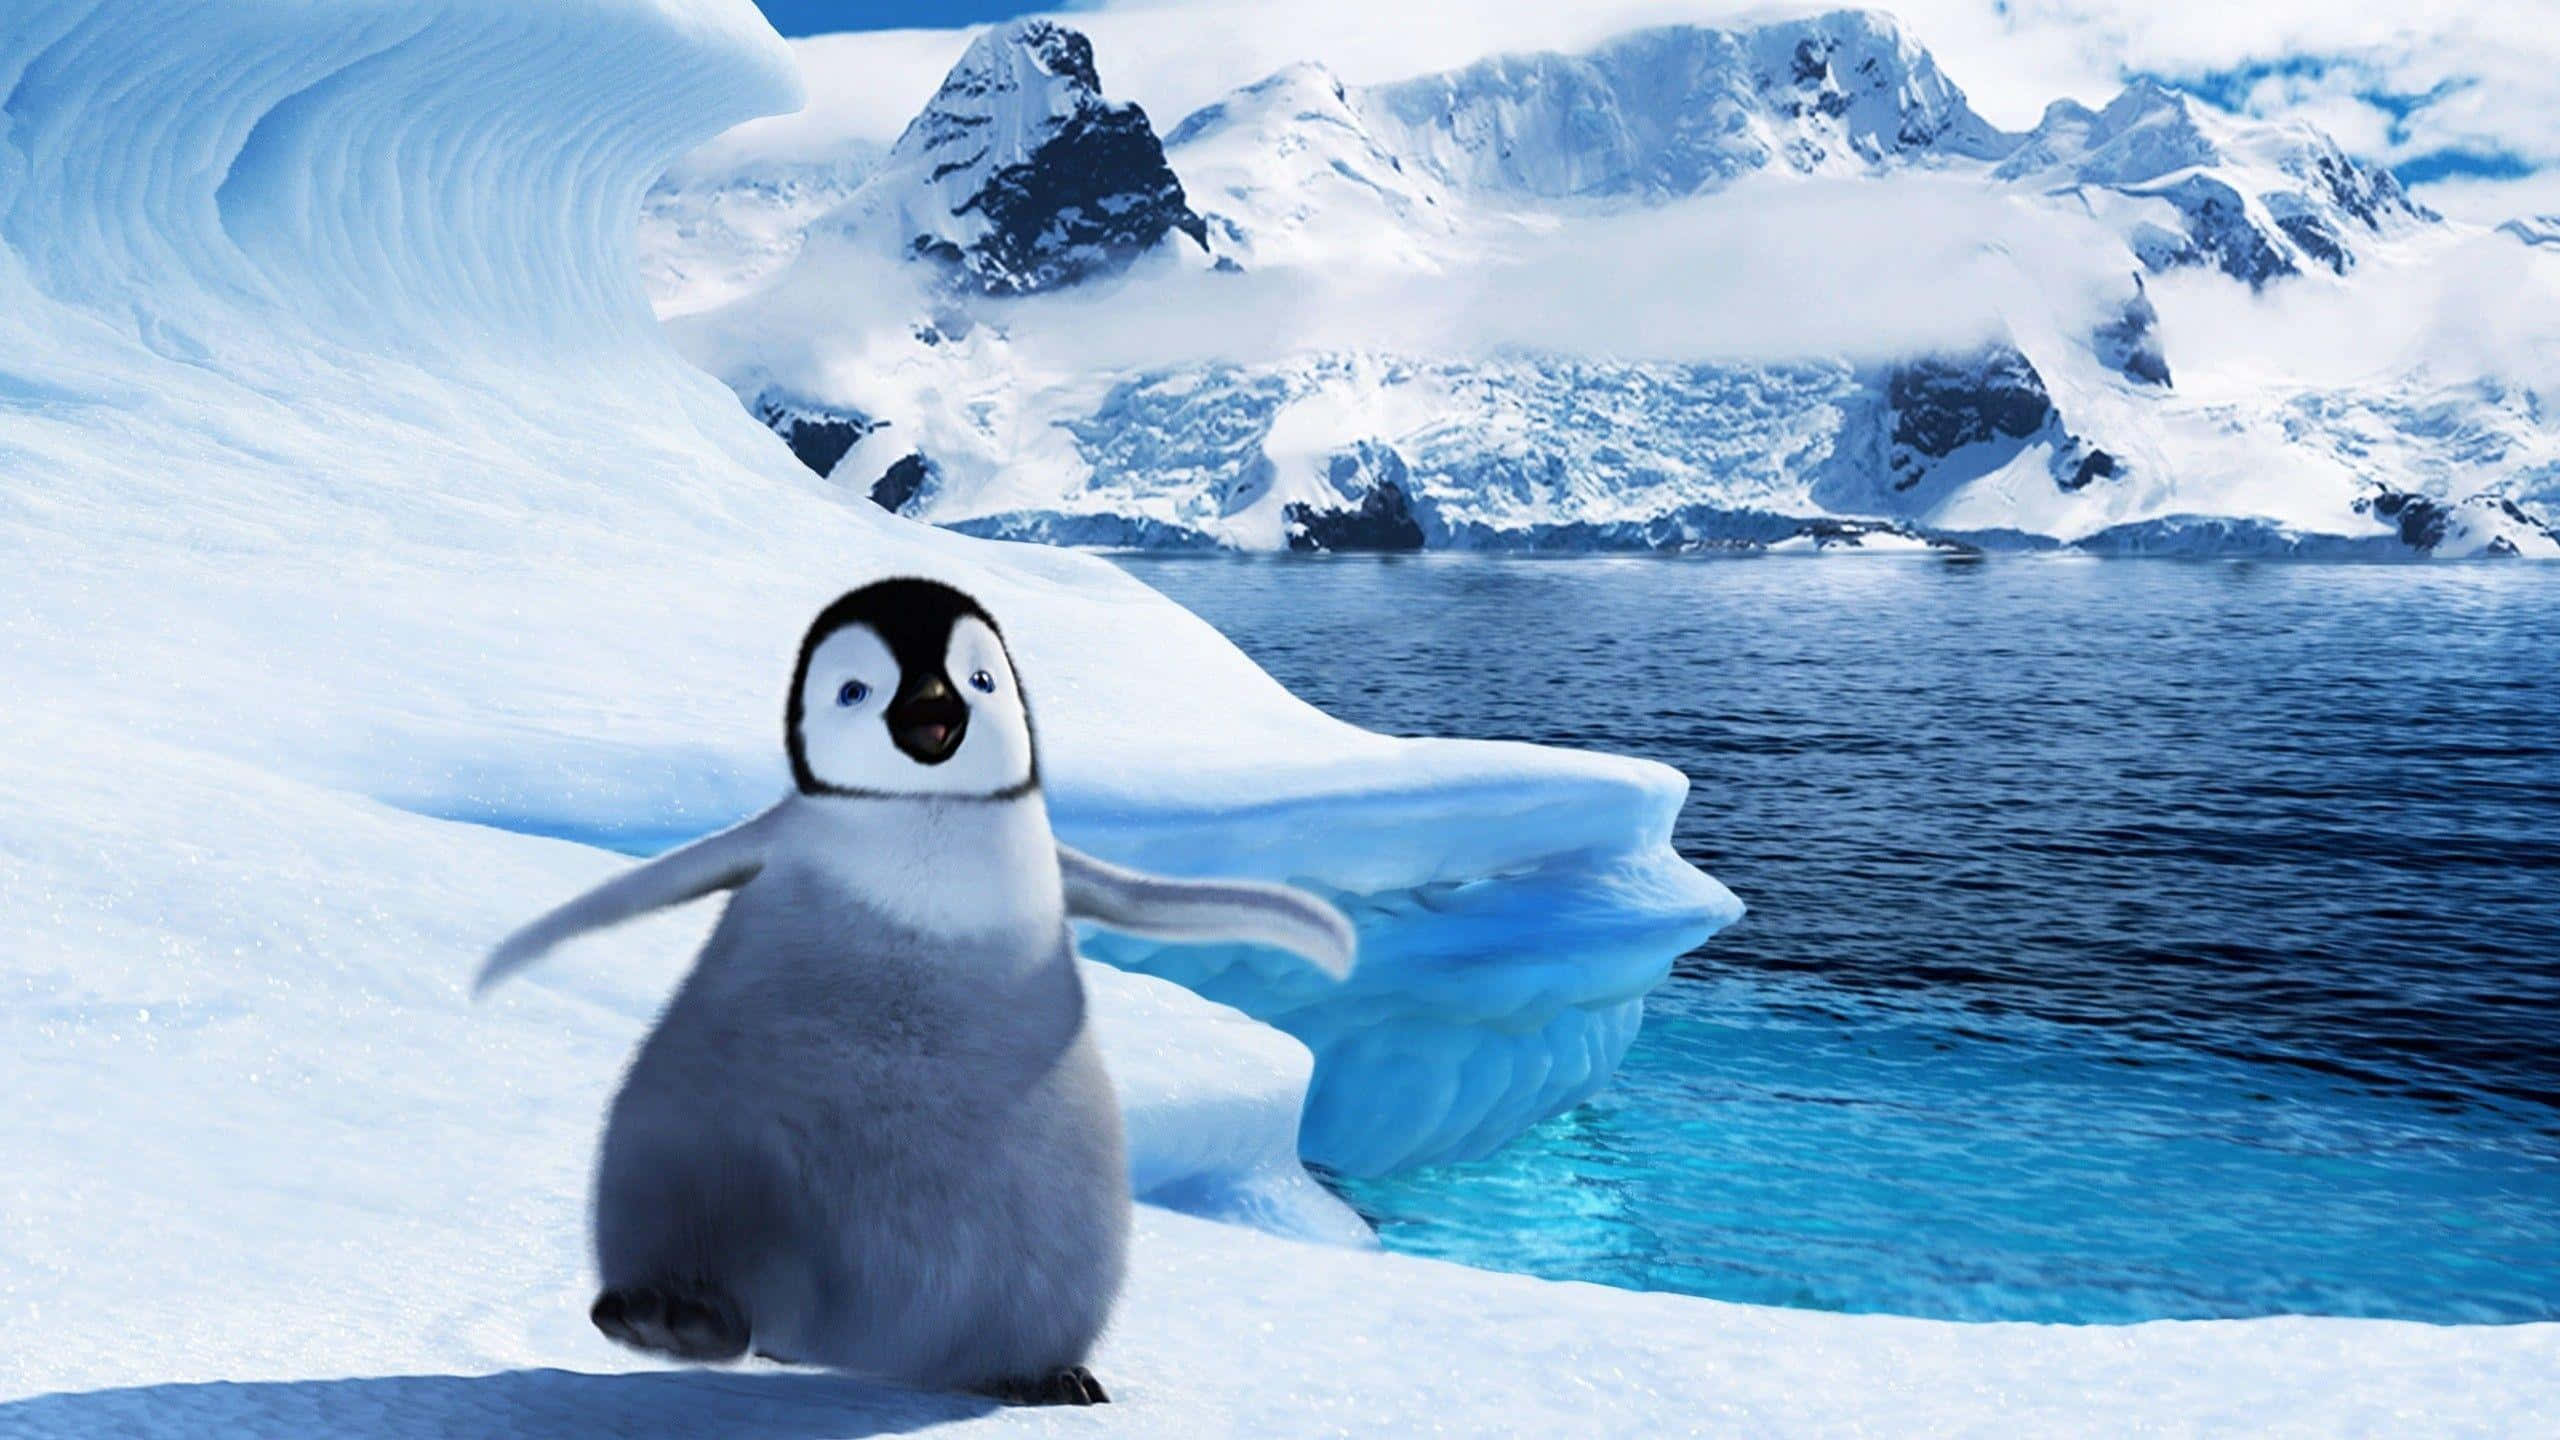 Adorable Baby Penguin Sitting on an Iceberg